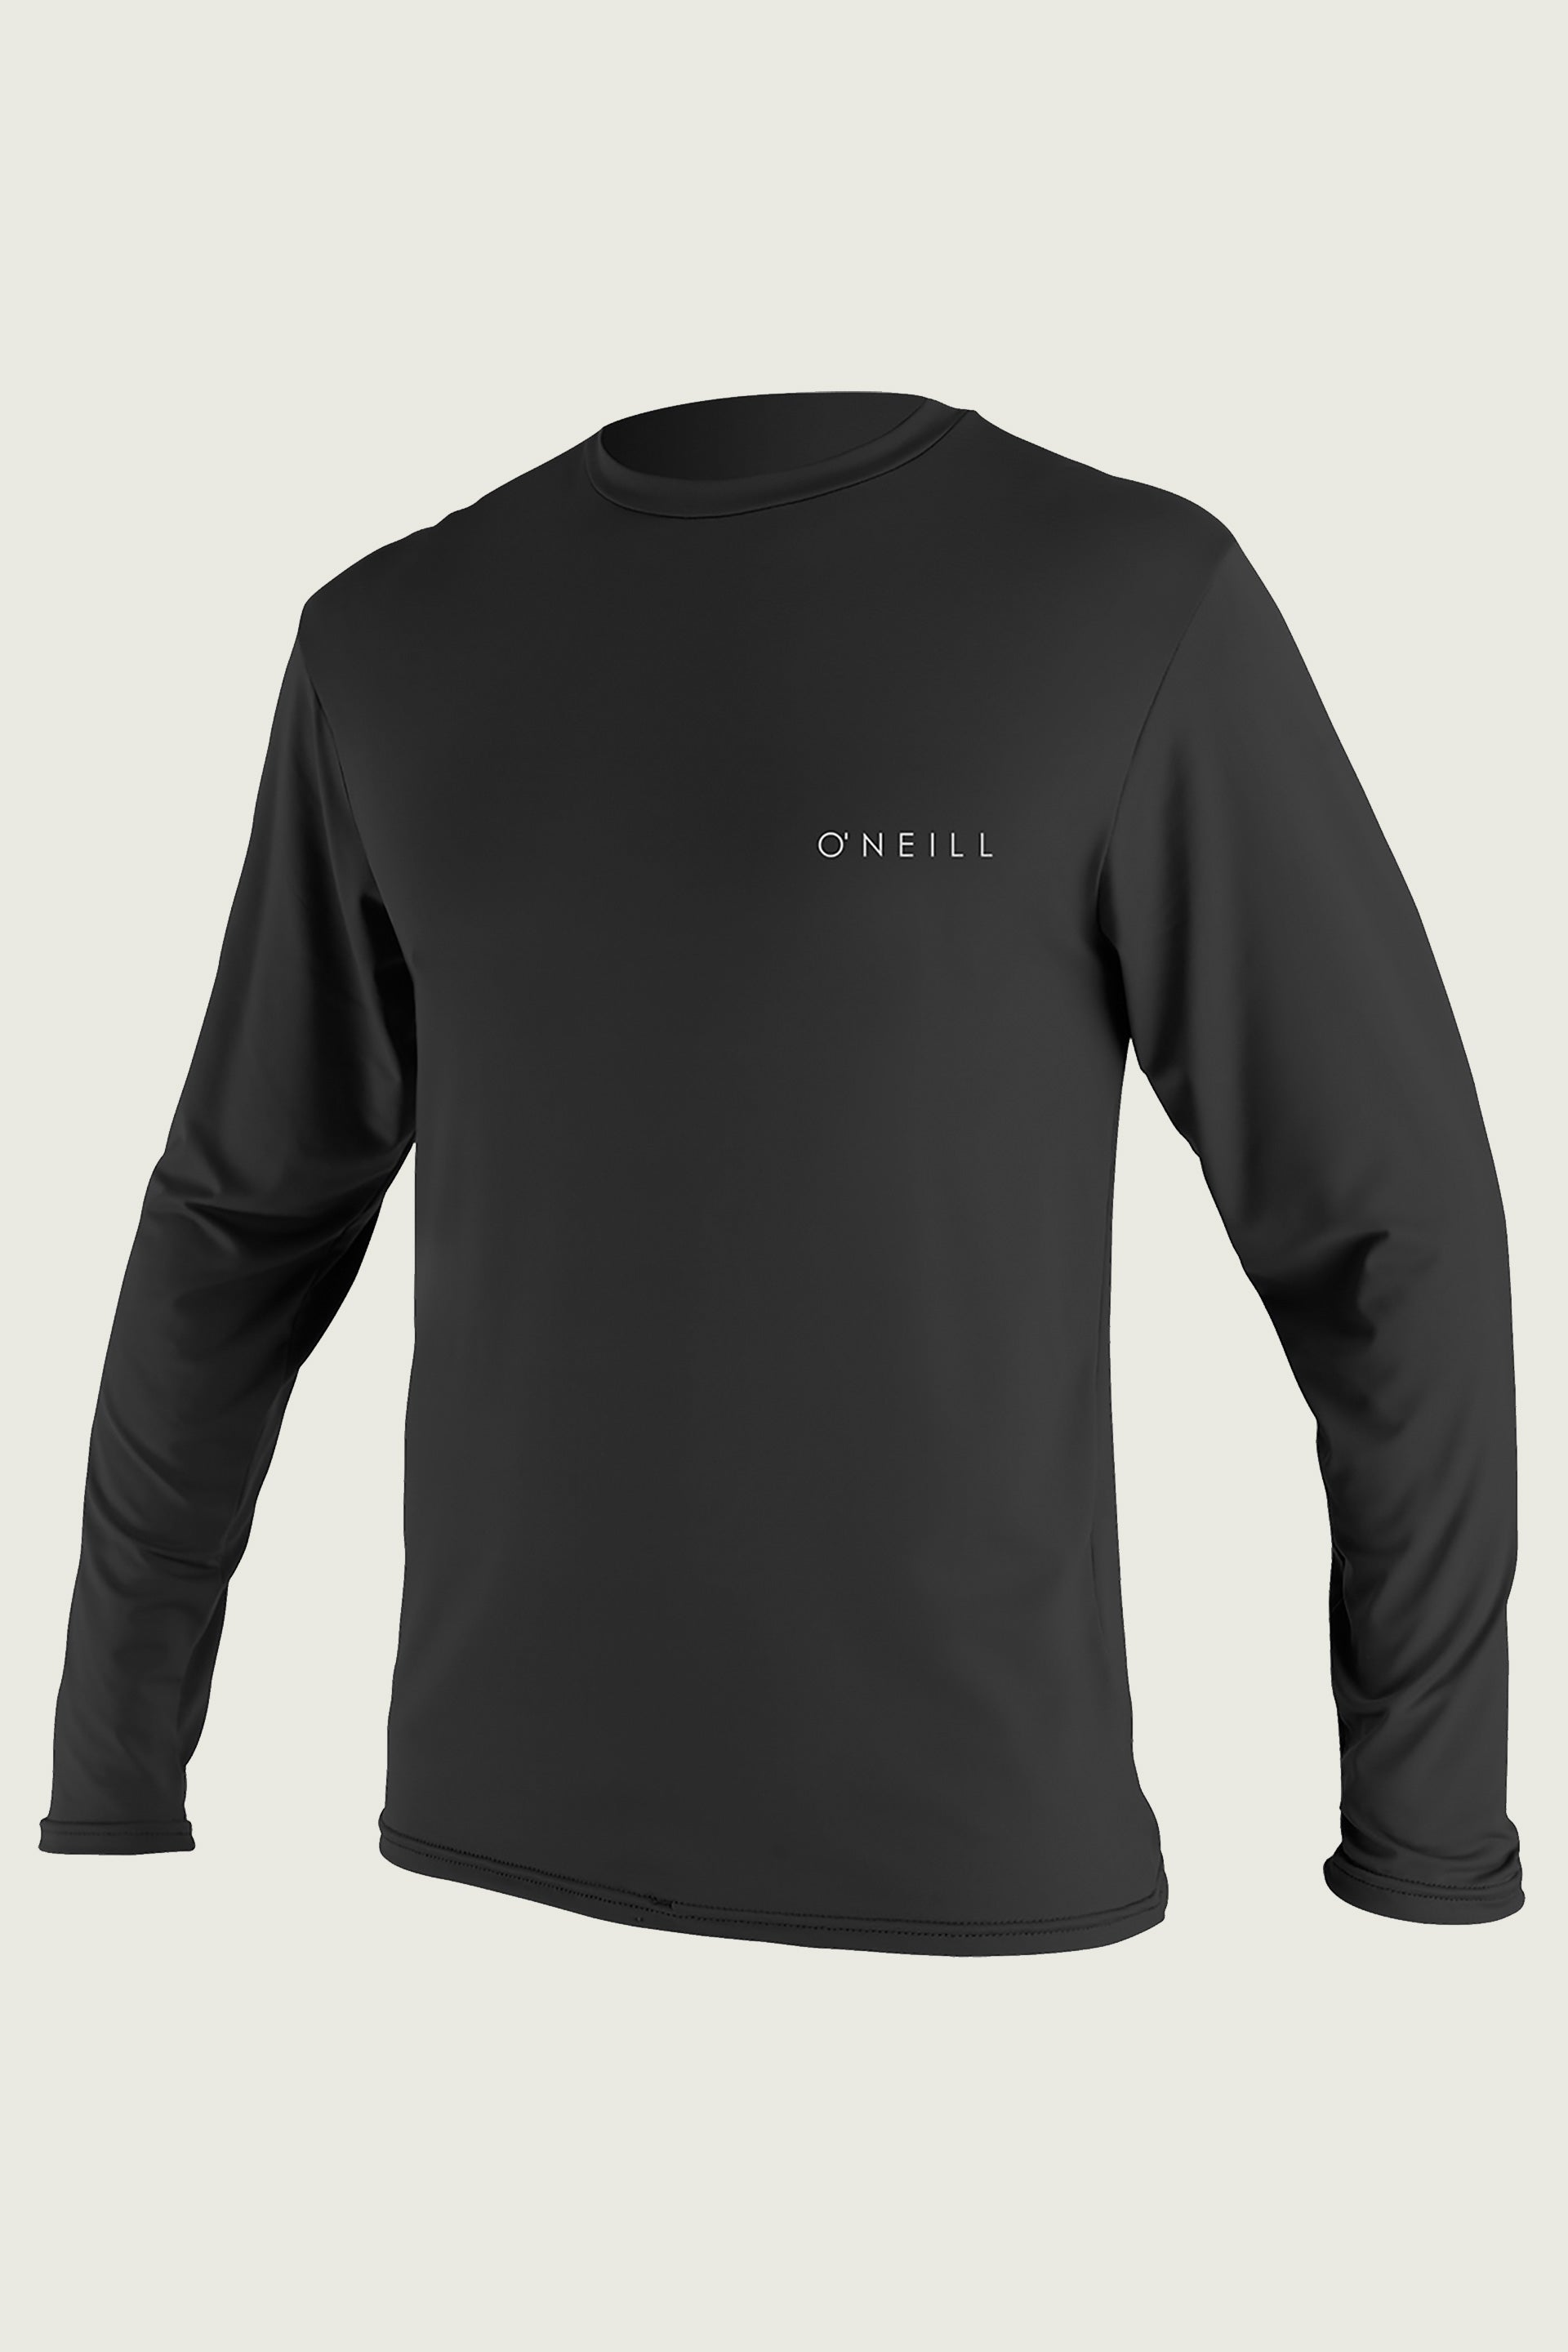 O'Neill Basic Skins 30+ Sun Long-Sleeve Shirt - Men's Black, XXL